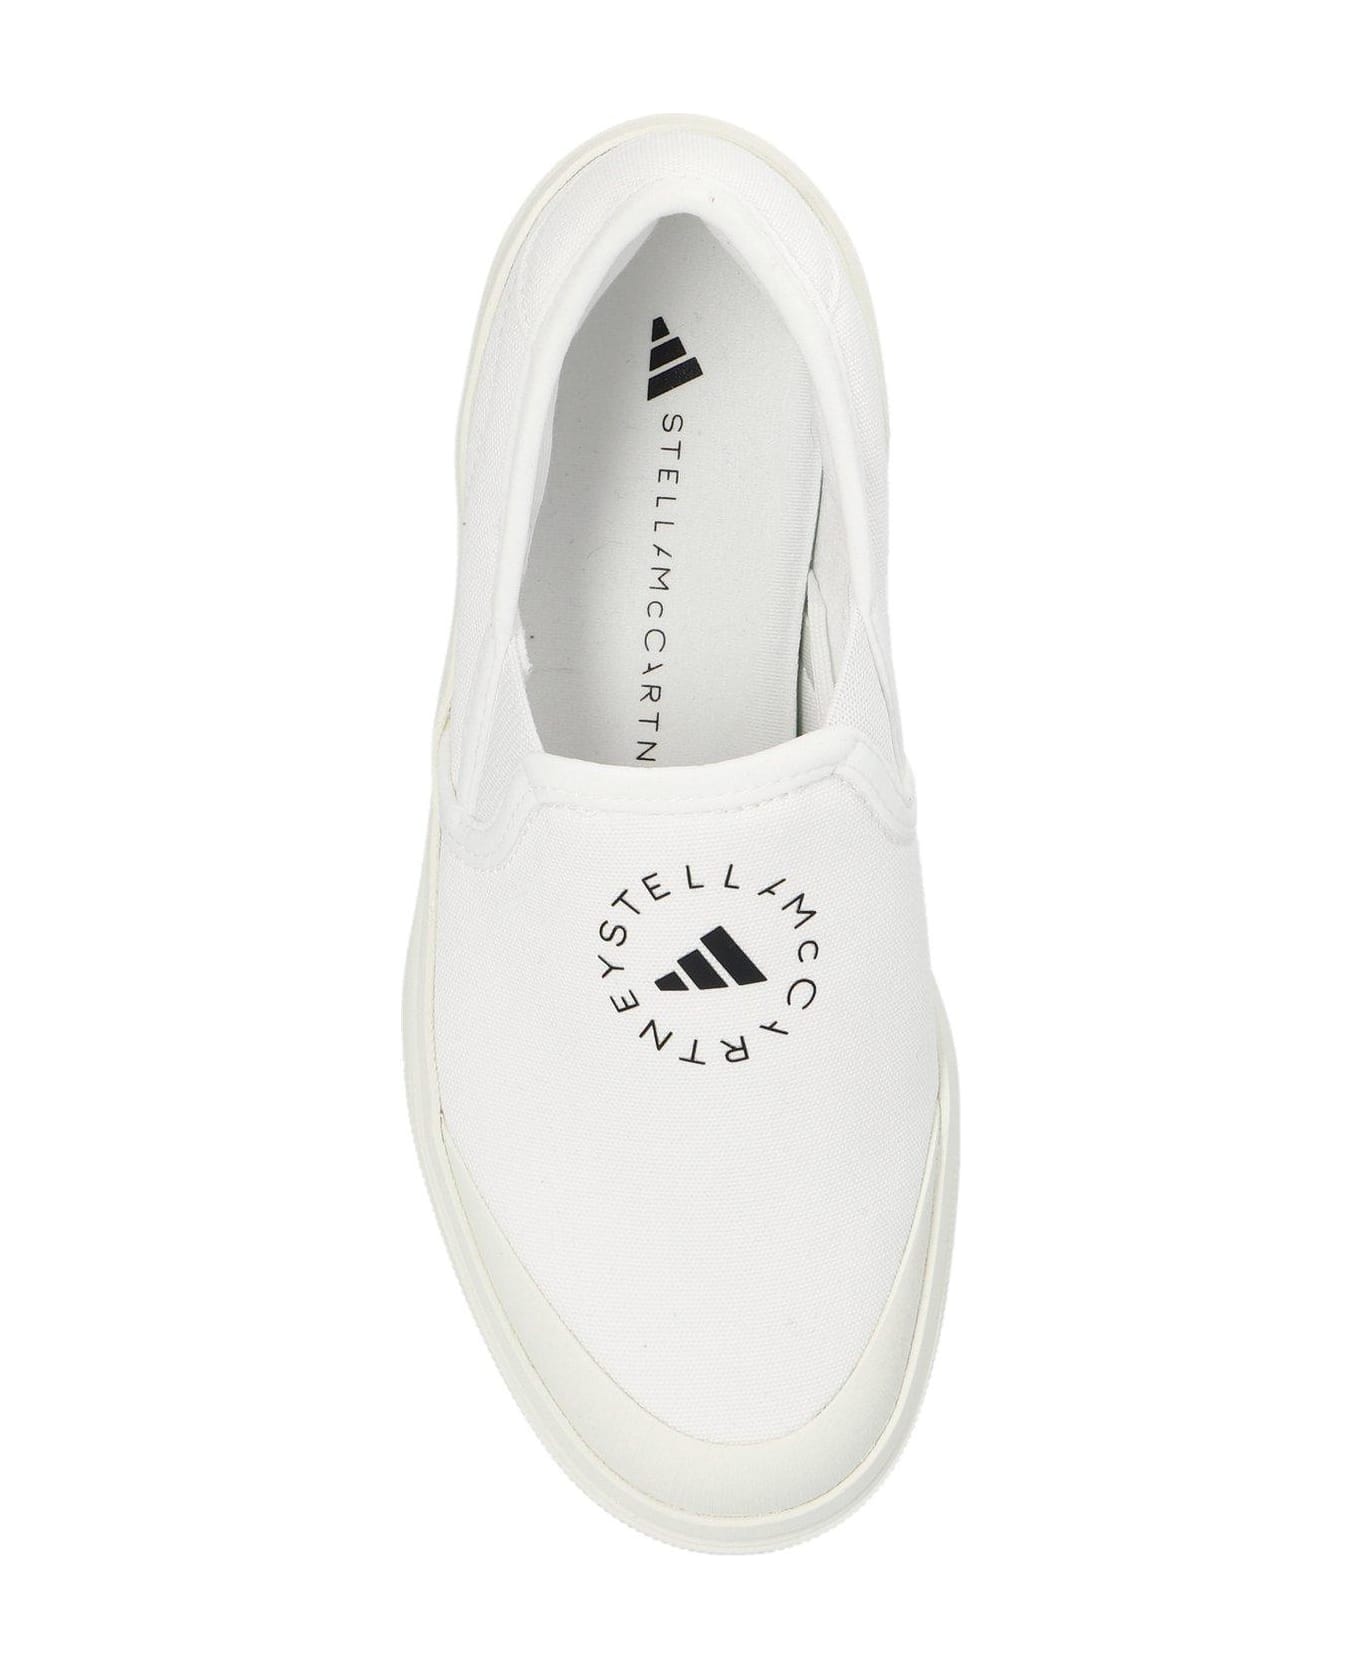 Adidas by Stella McCartney Court Slip-on Sneakers スニーカー